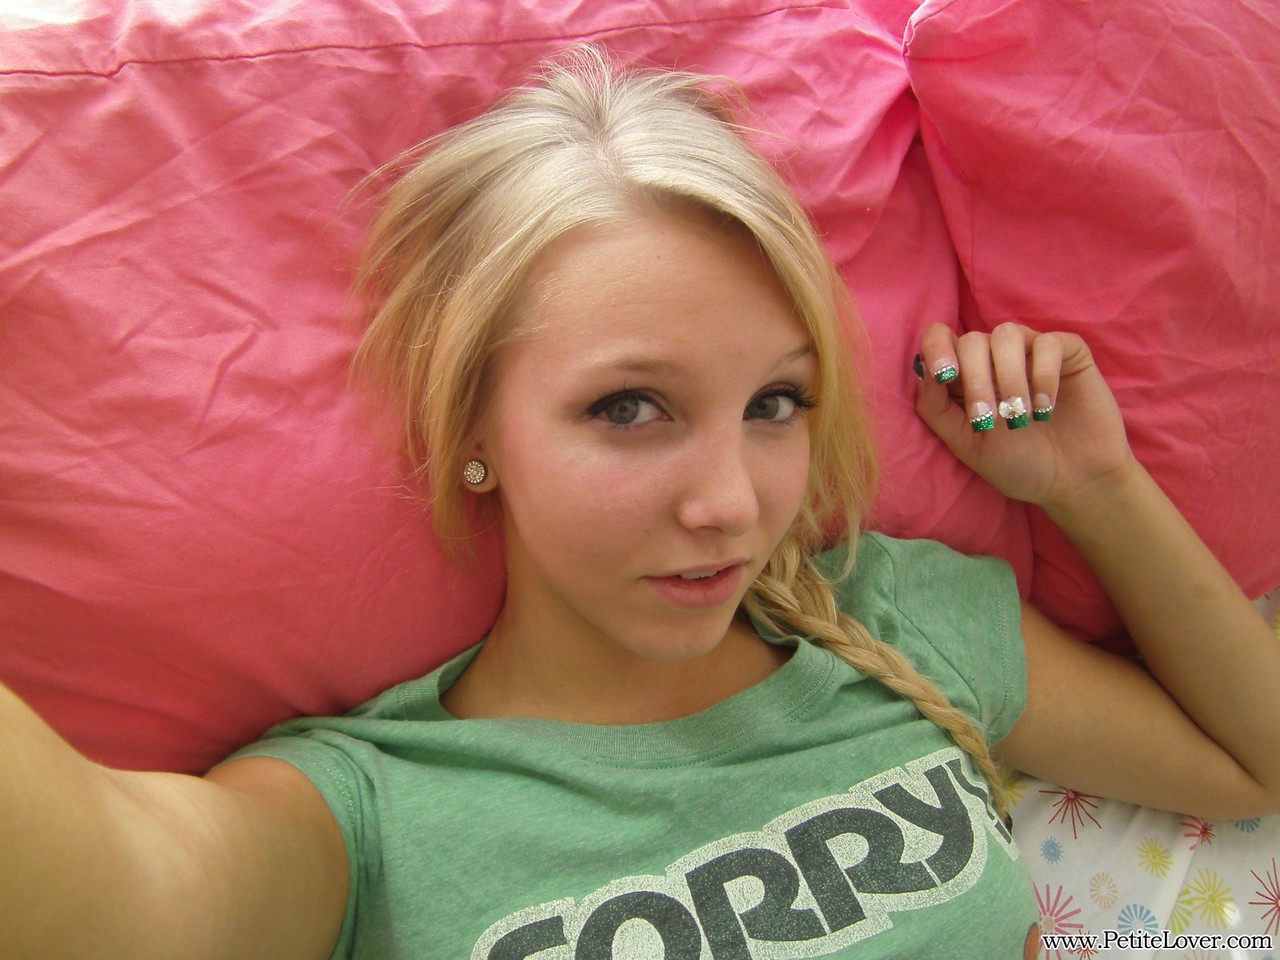 Cute blonde teen snaps self shots of her bare boobs in cutoff jean shorts photo porno #428474912 | Petite Lover Pics, Elle Blue, Selfie, porno mobile